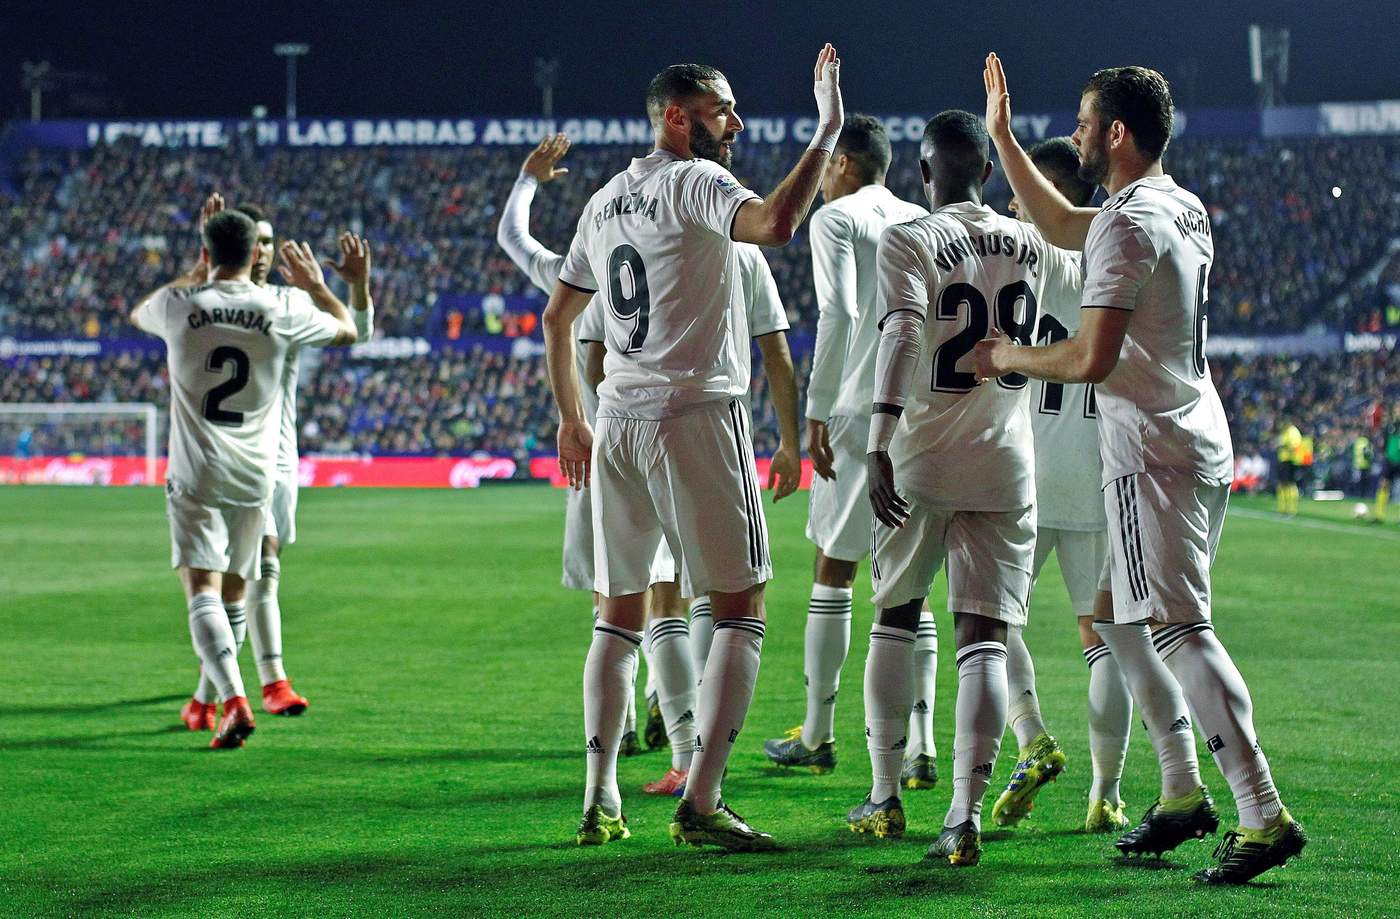 Real Madrid triunfa con polémica